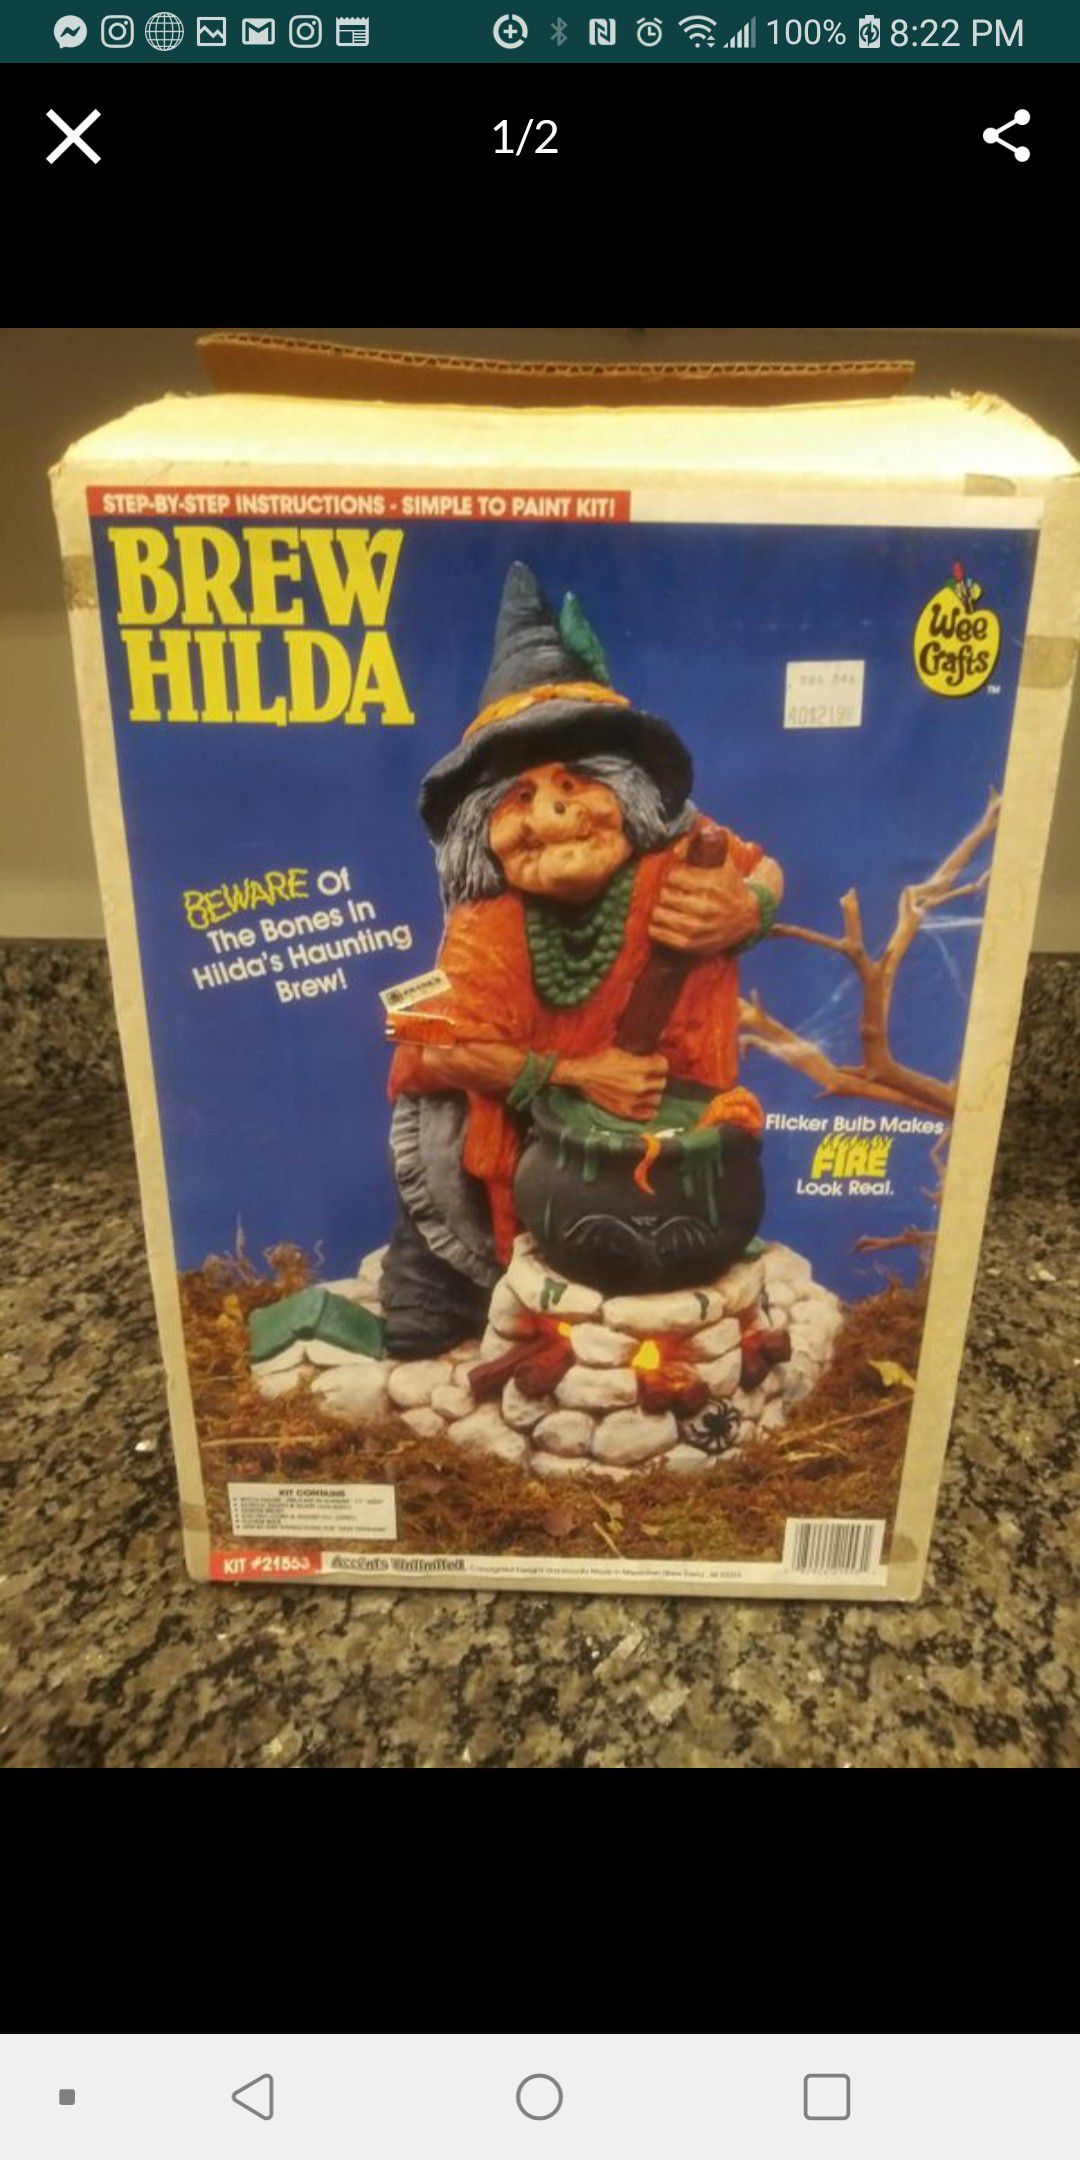 Brew Hilda Halloween paint kit